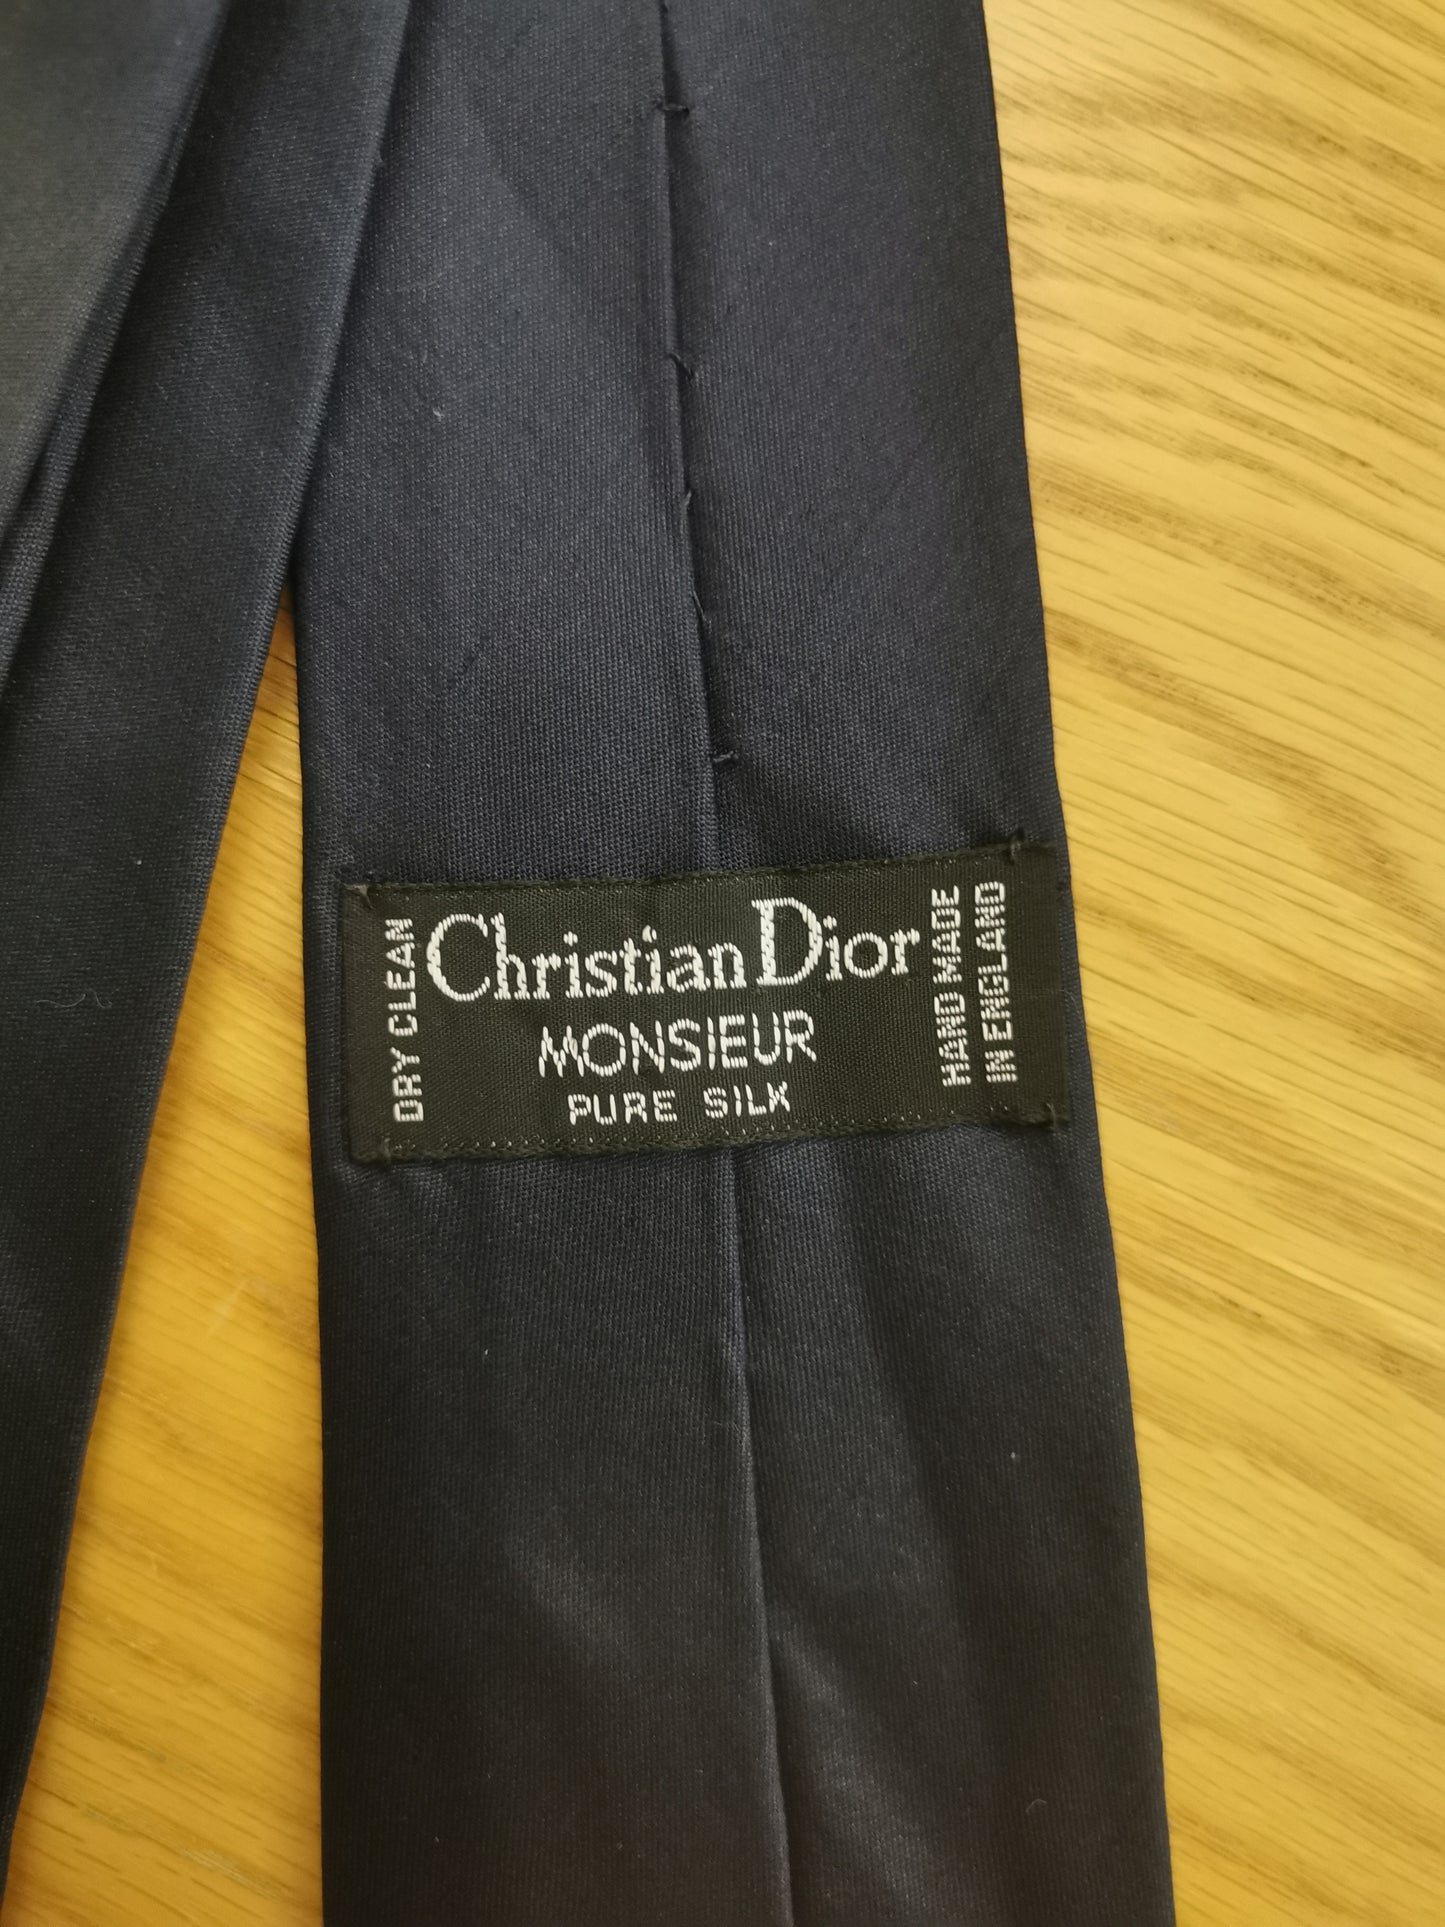 100% silk Christian Dior handmade Monsieur tie